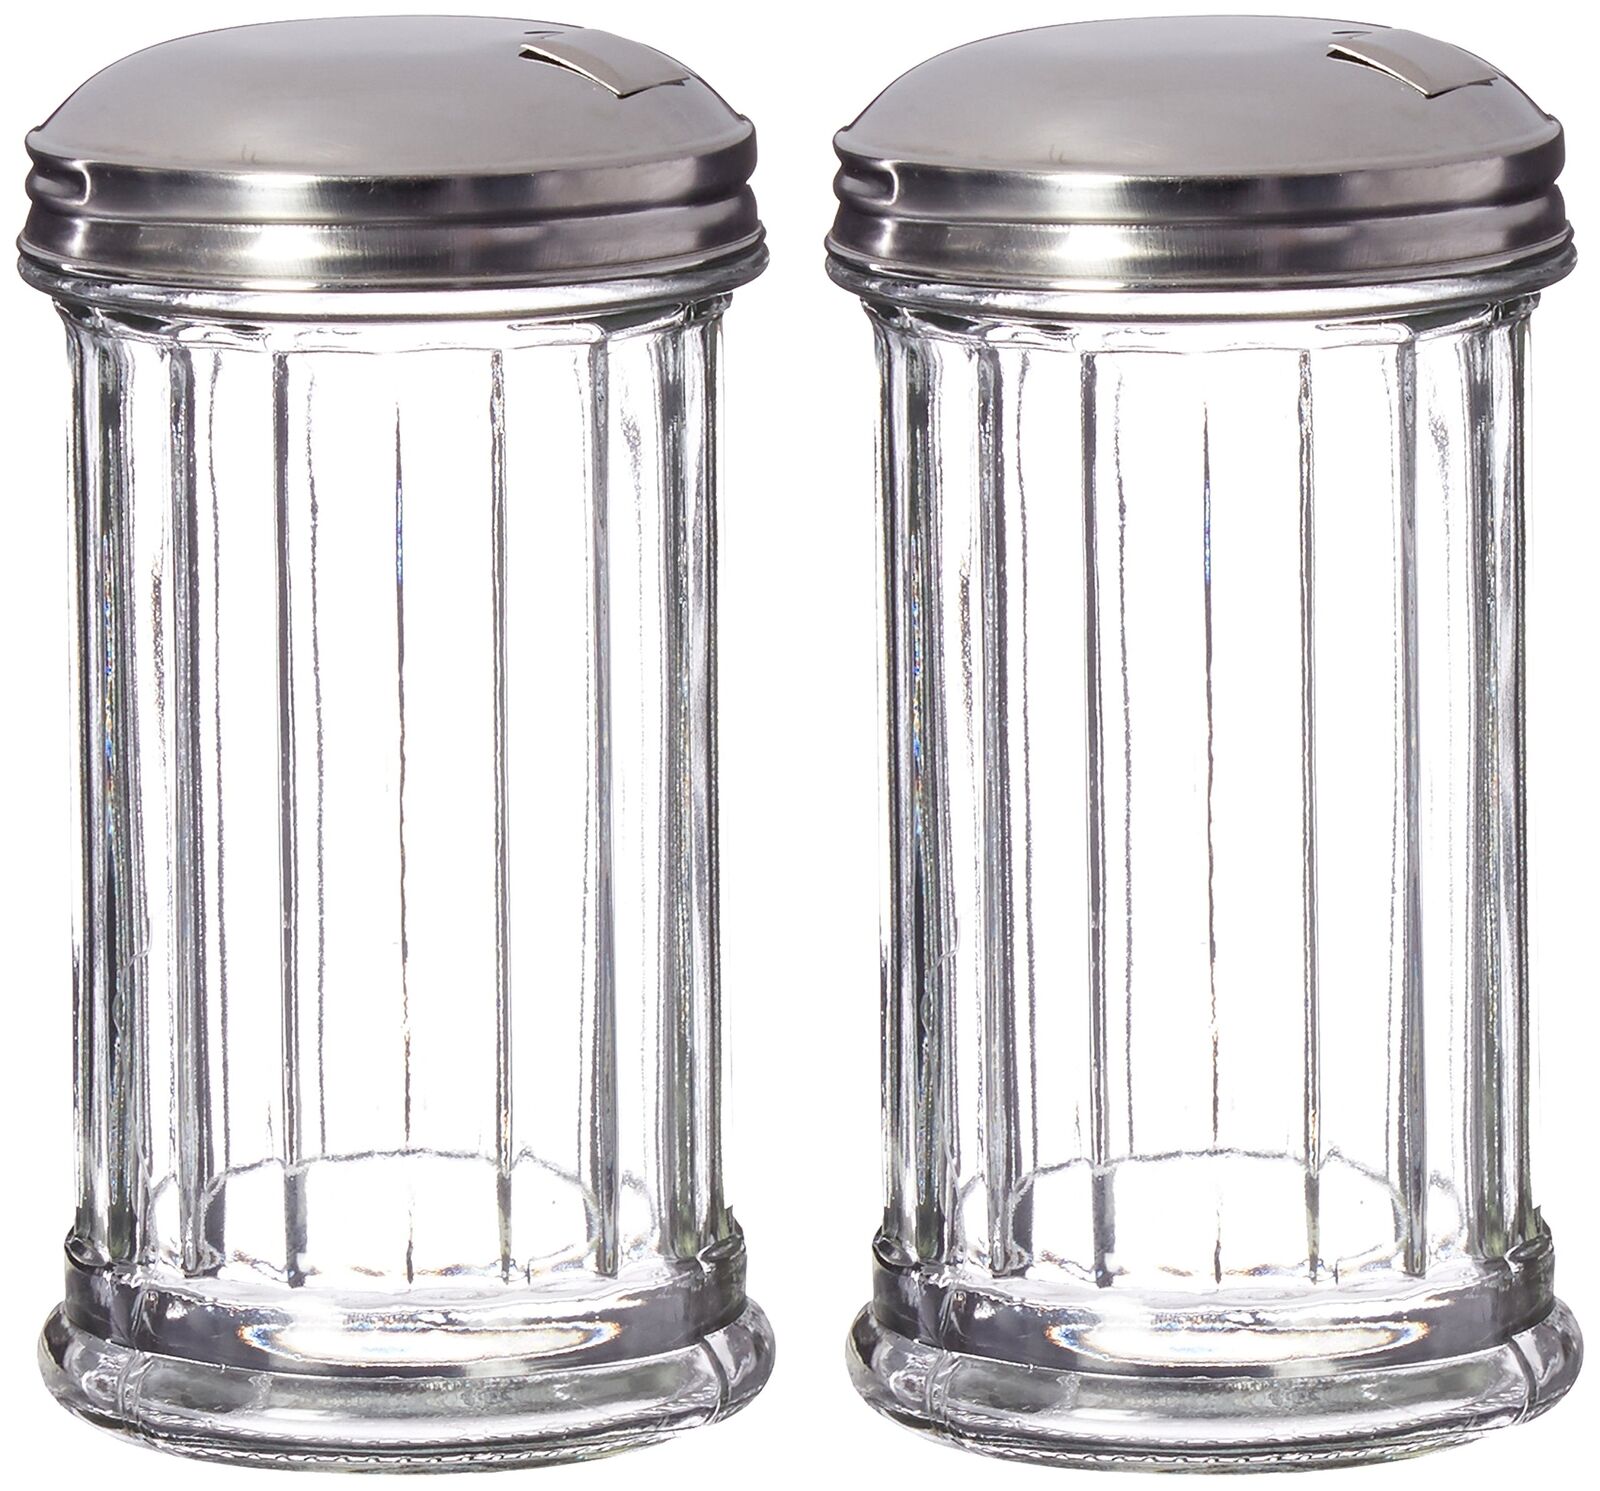 Retro Style Sugar Dispenser/Pourer/Shaker, Glass Jar, Stainless Steel Pour-Fl...